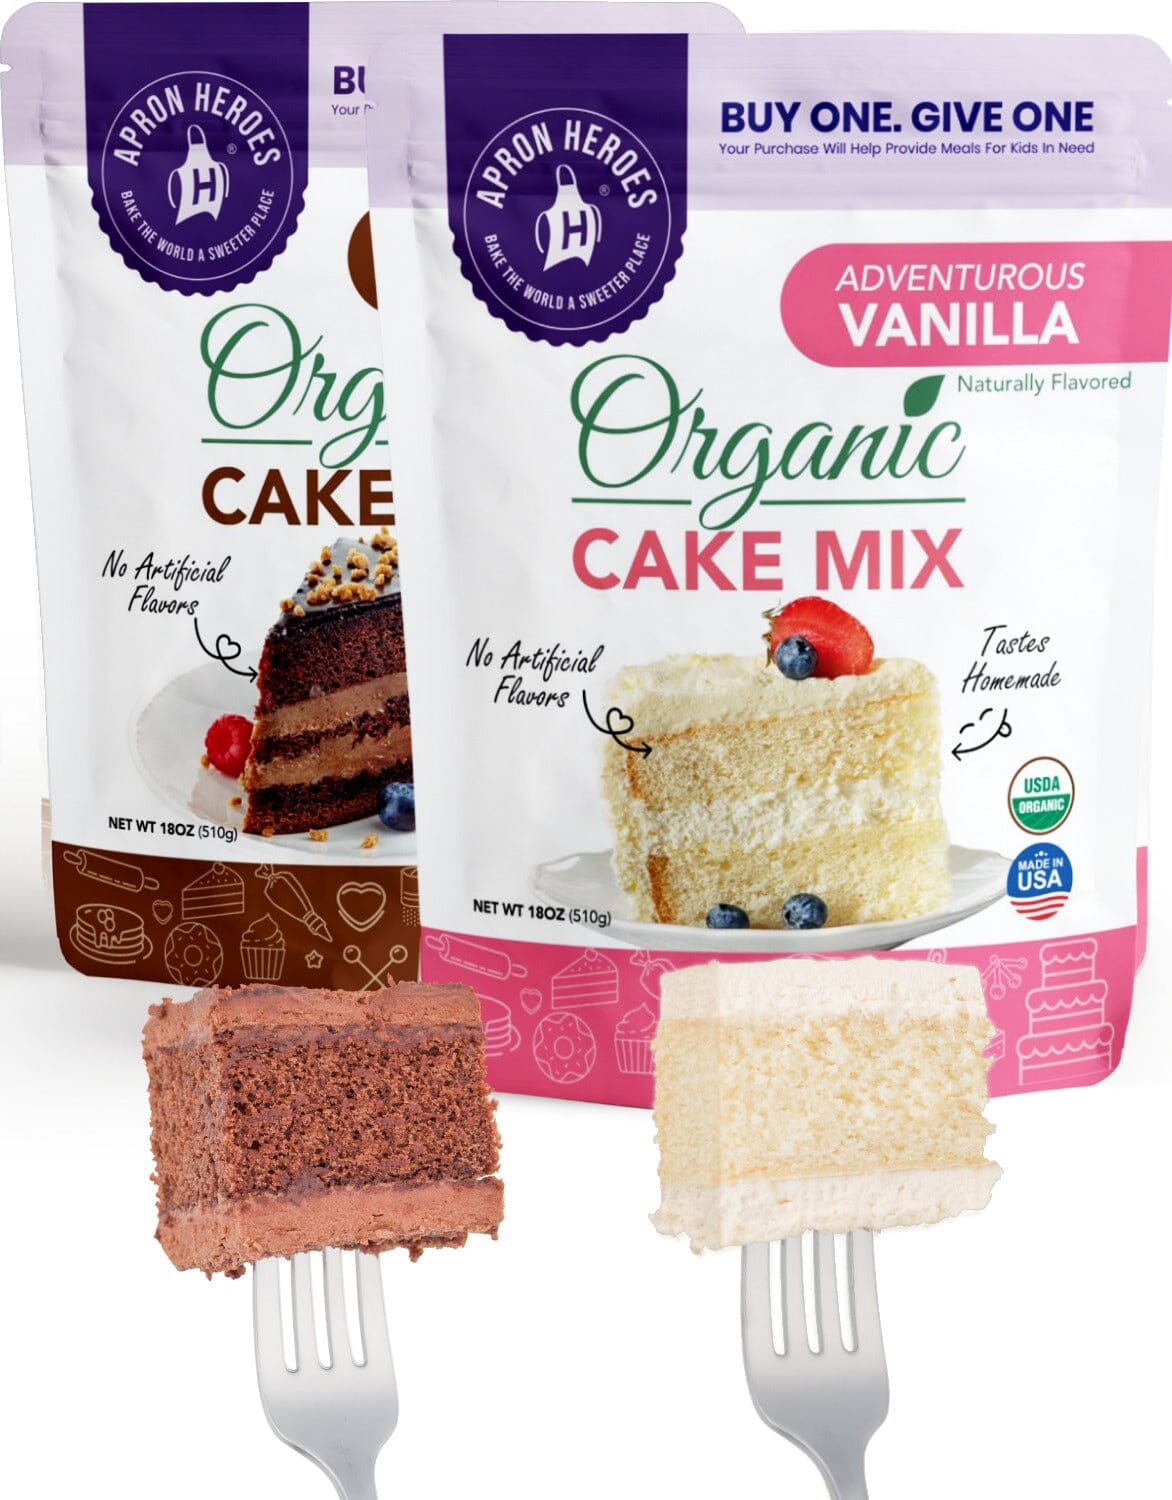 Organic Cake Mix Cake Mix Apron Heroes Variety Value Pack 